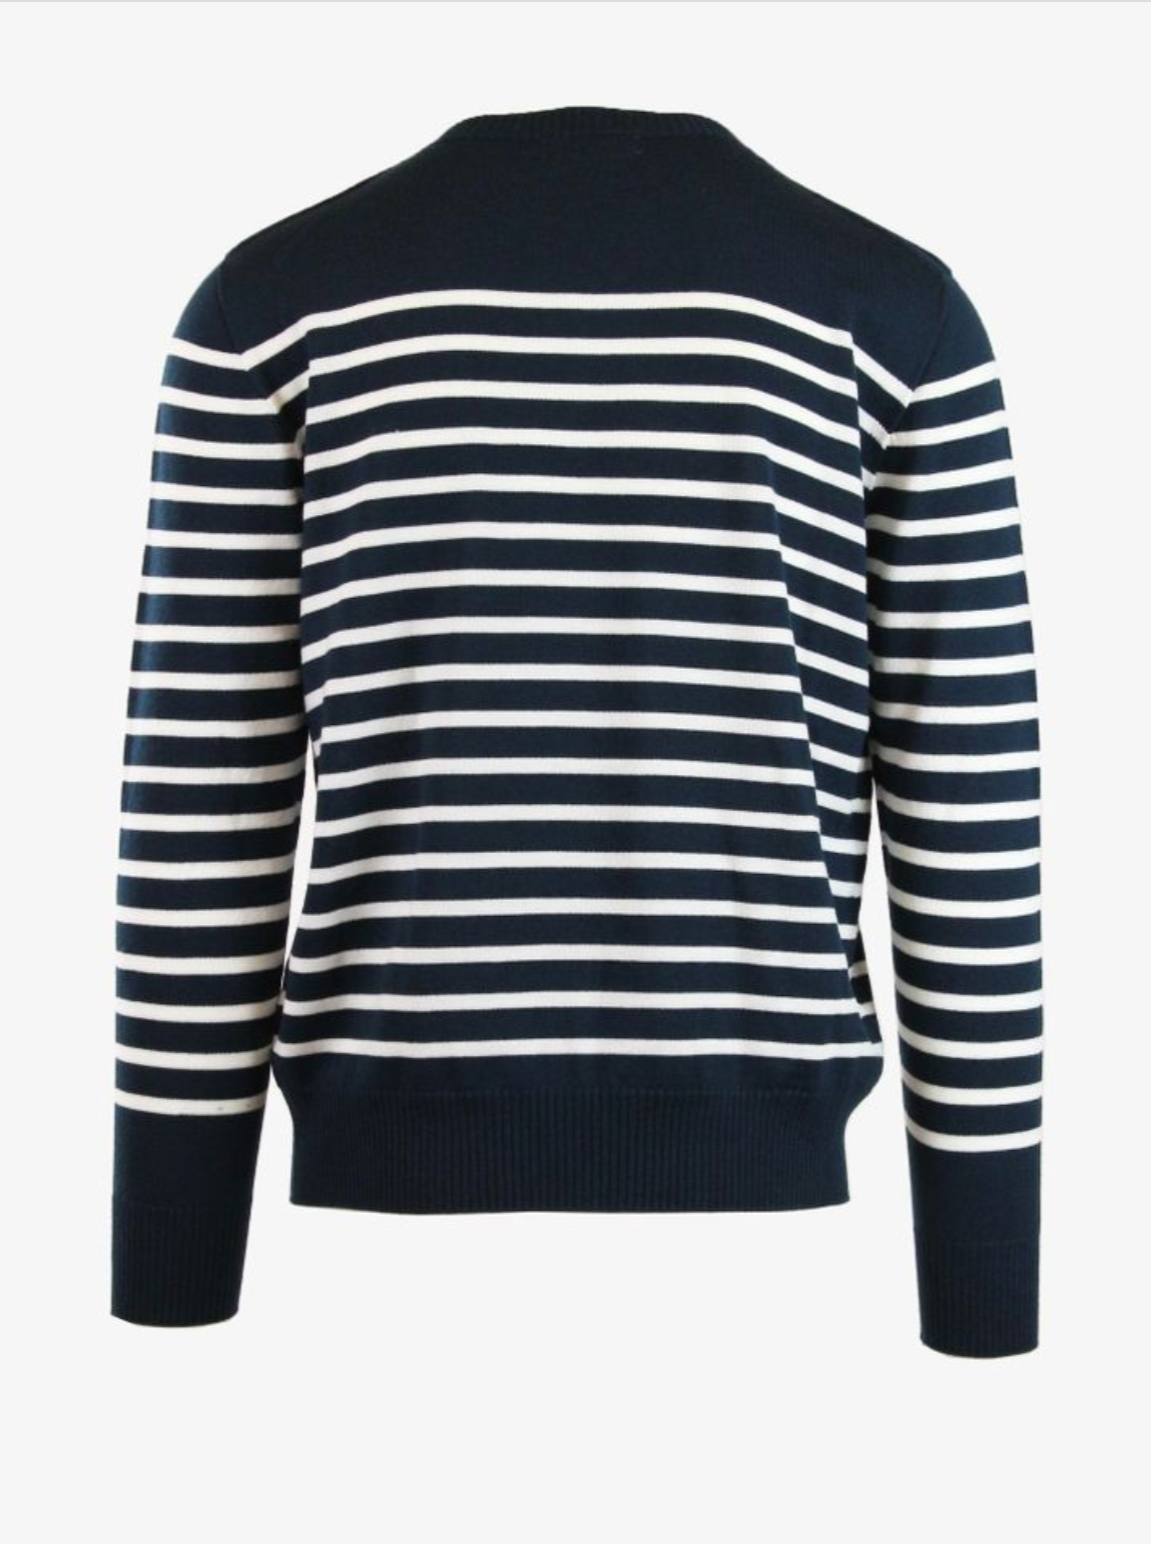 montauk navy/ivory stripe men's sweater back view